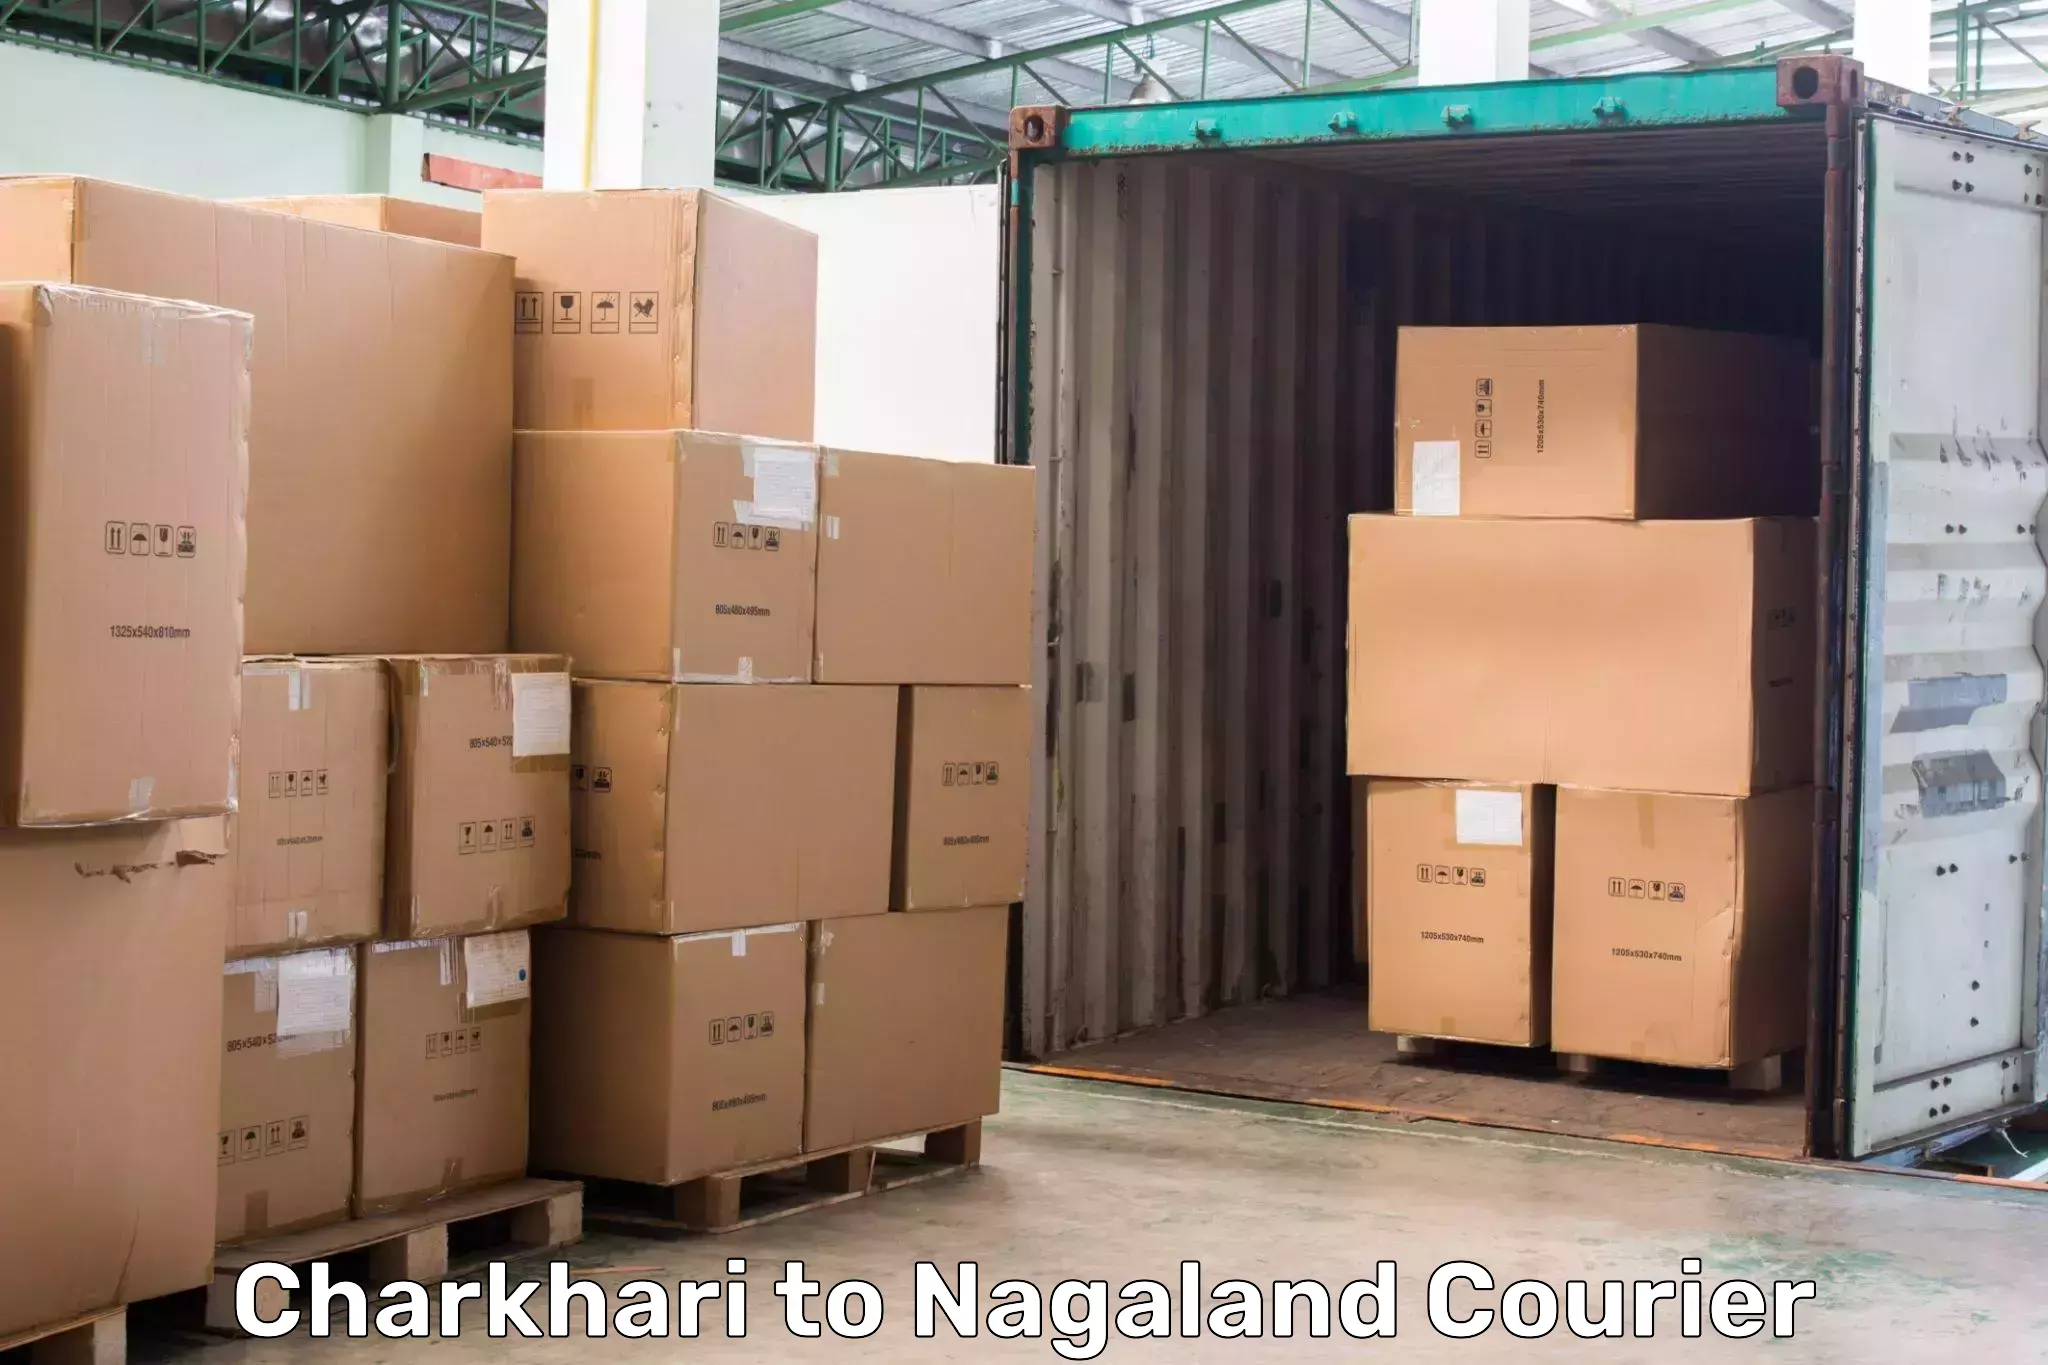 Courier service comparison Charkhari to Nagaland